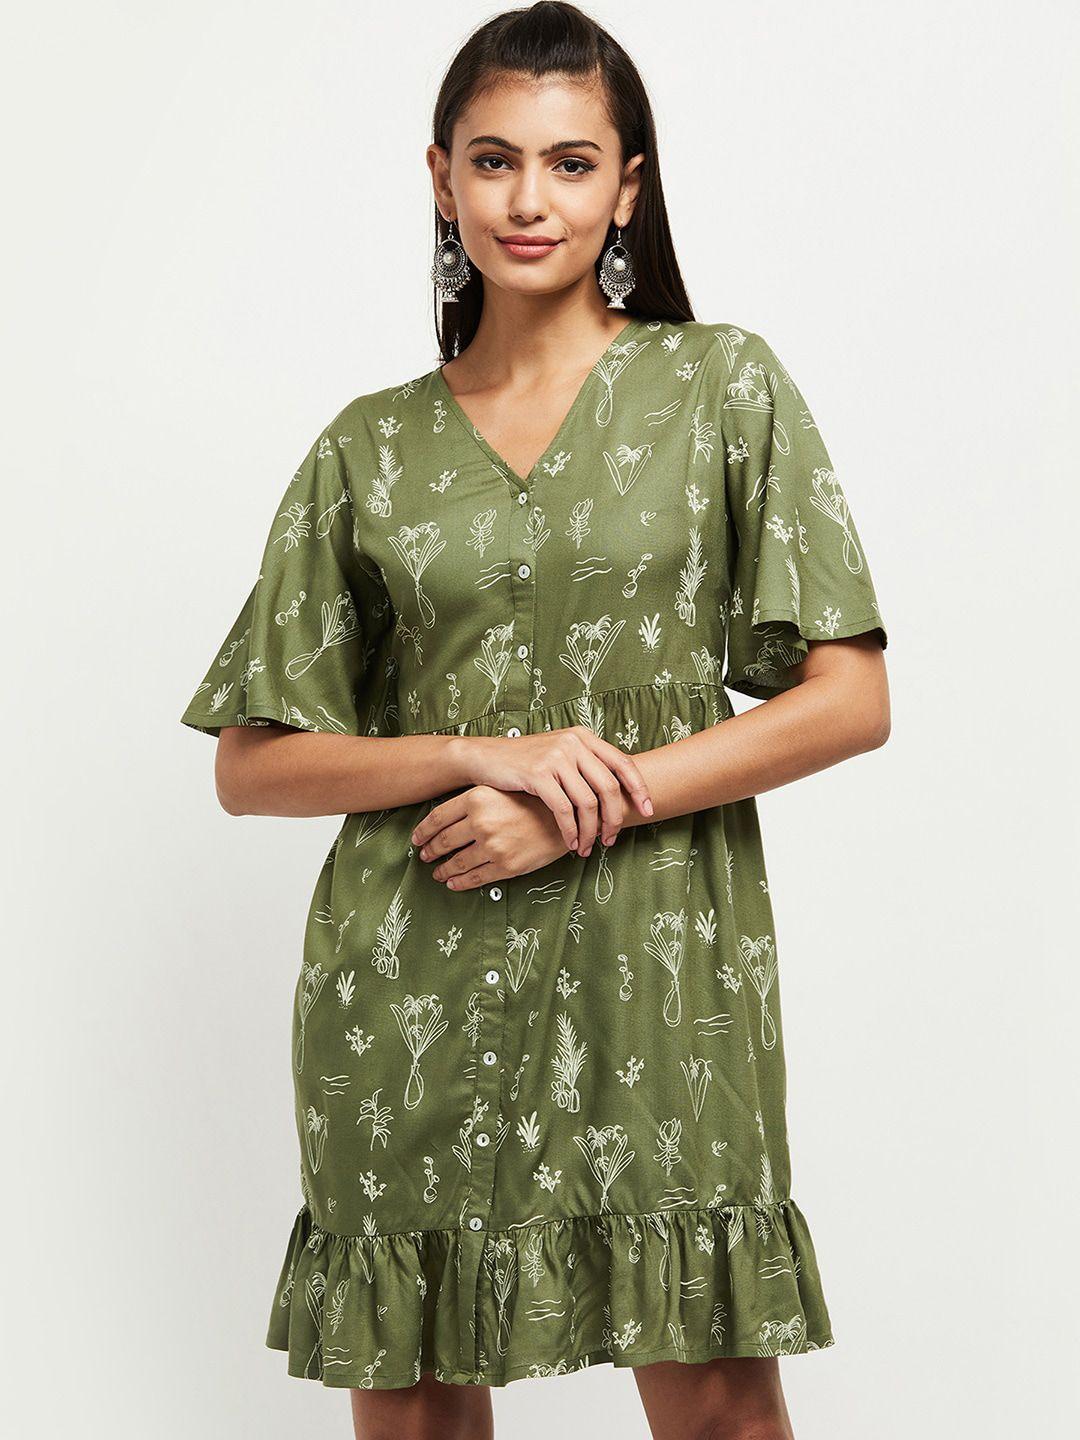 max green floral a-line dress